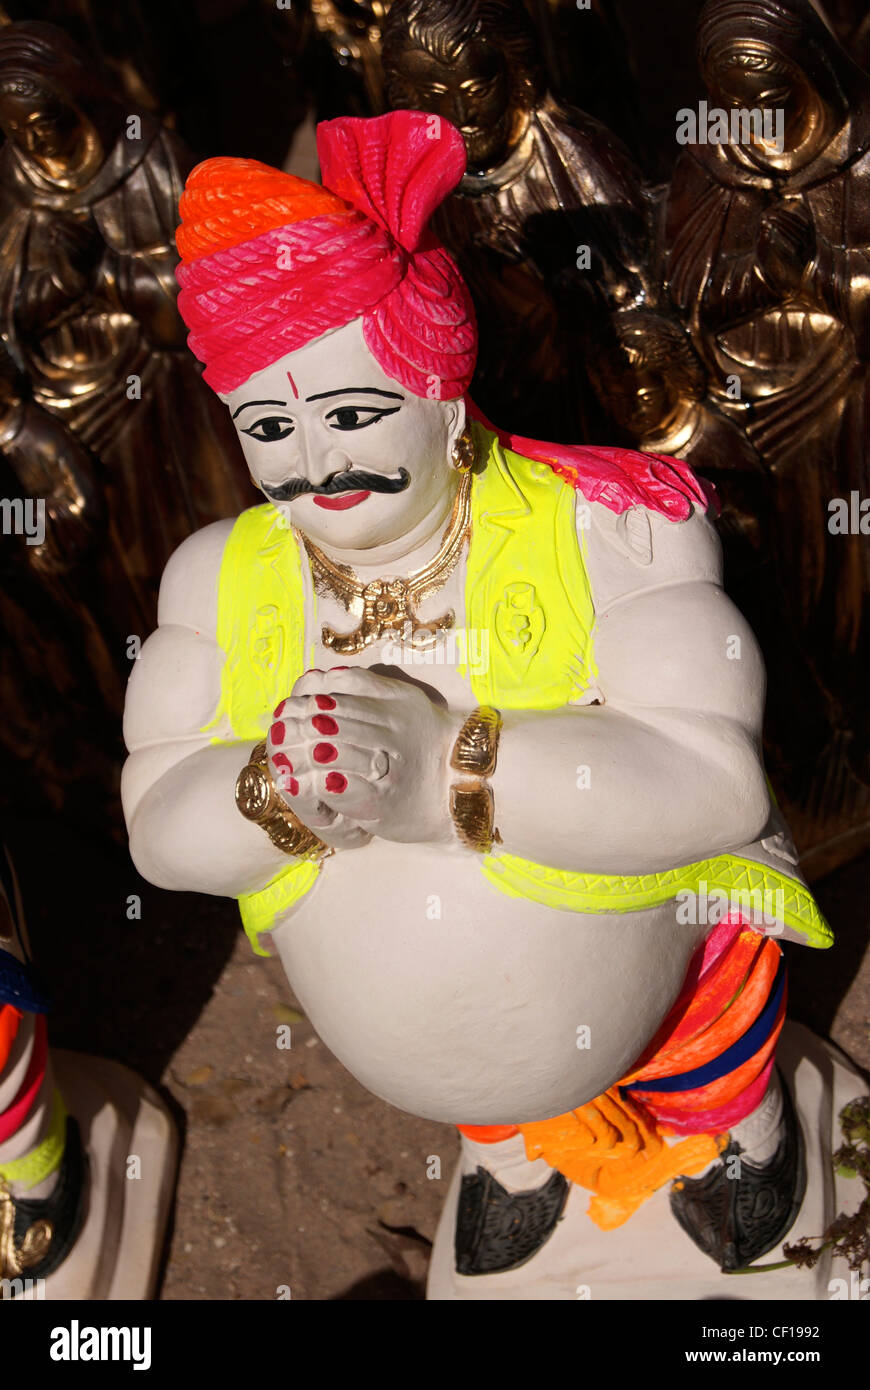 A Namaste saying Aged Indian Paunch Man Sculpture Model Rajasthan handicrafts Stock Photo